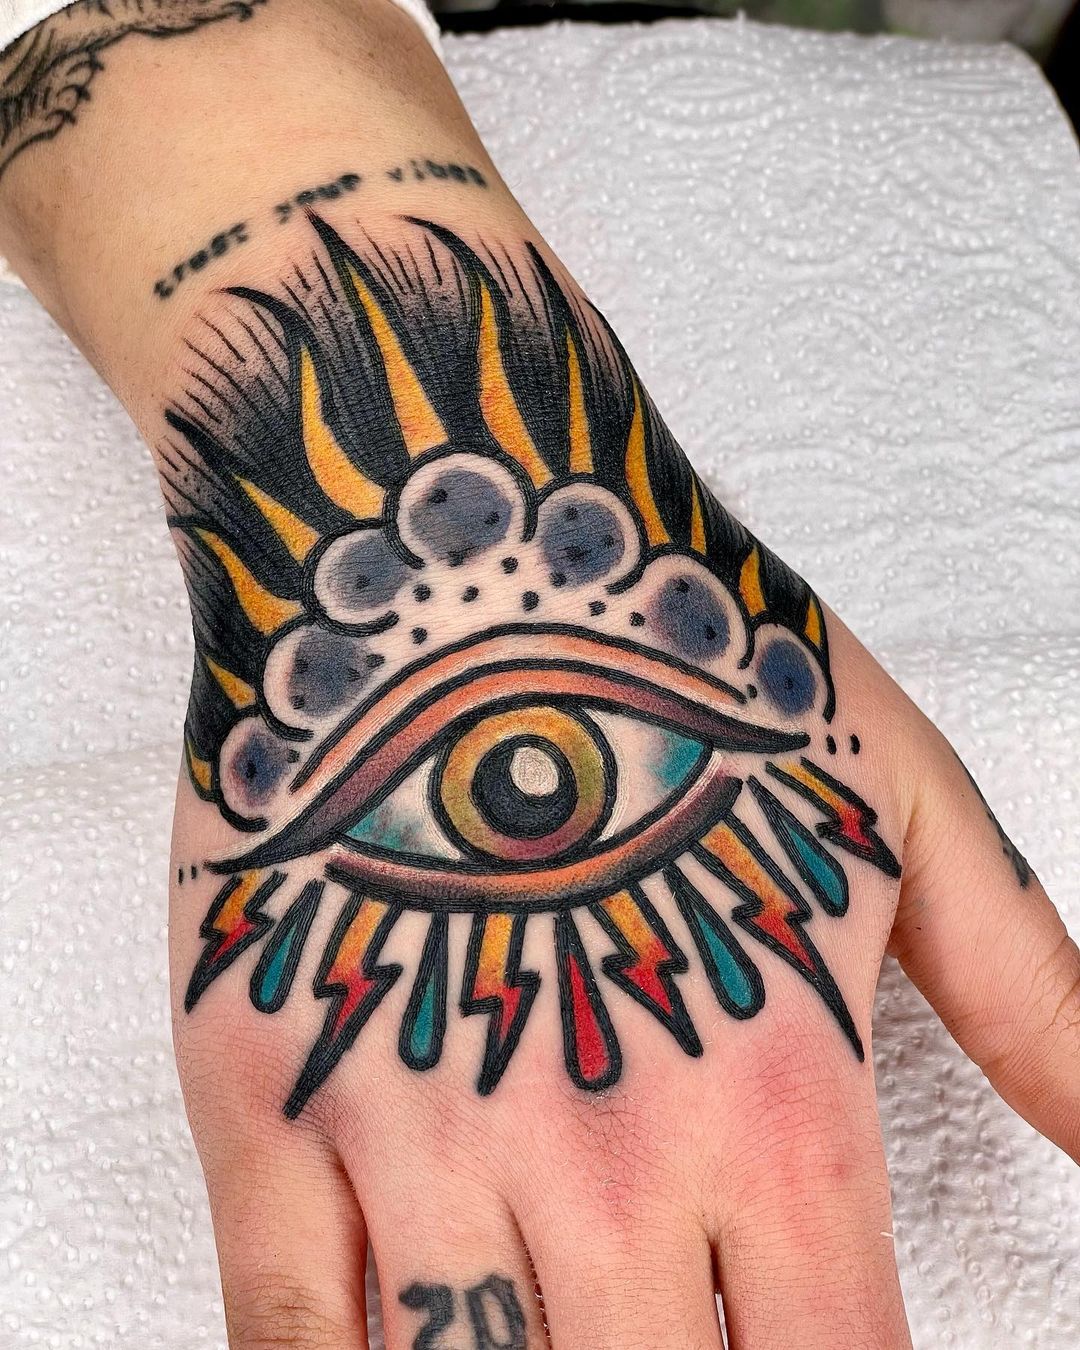 Old School colorful Eye Tattoo